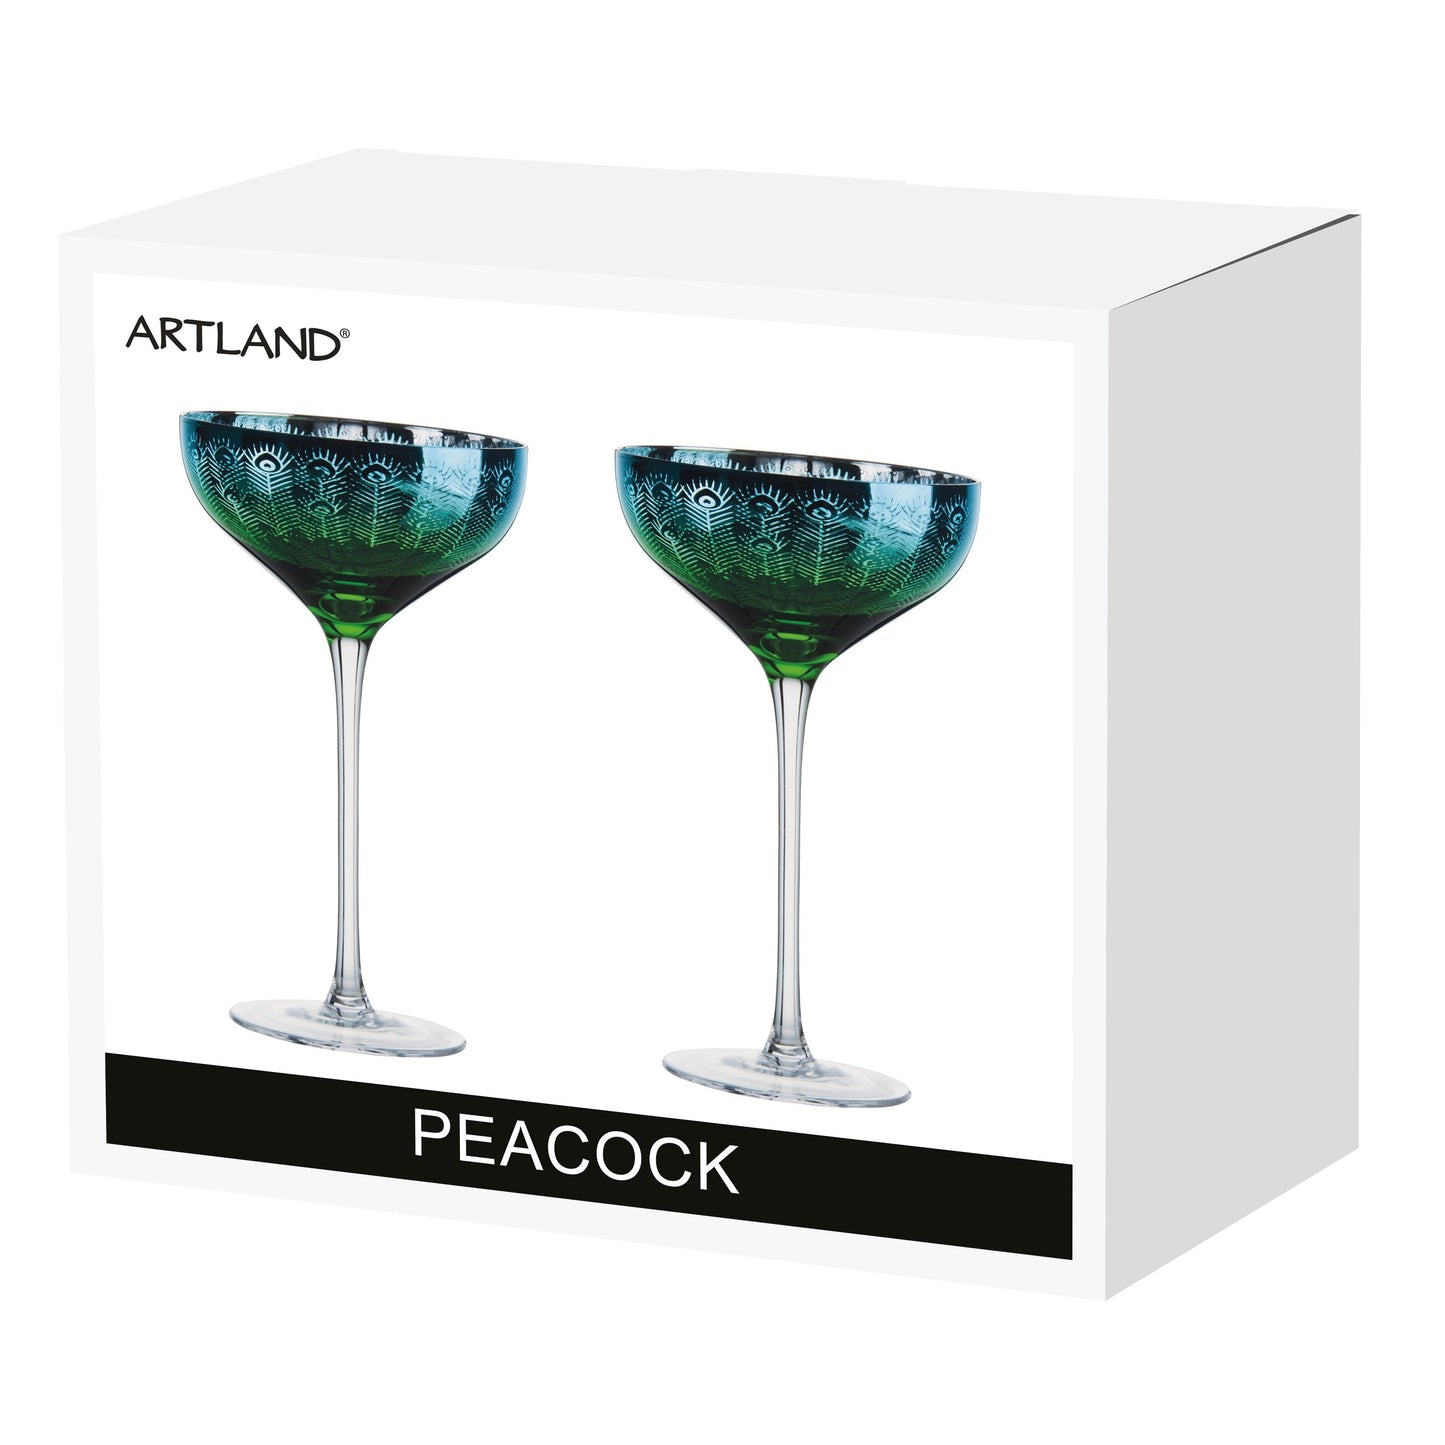 Artland Glass Peacock Champagne Saucers - Set of 2 Glasses